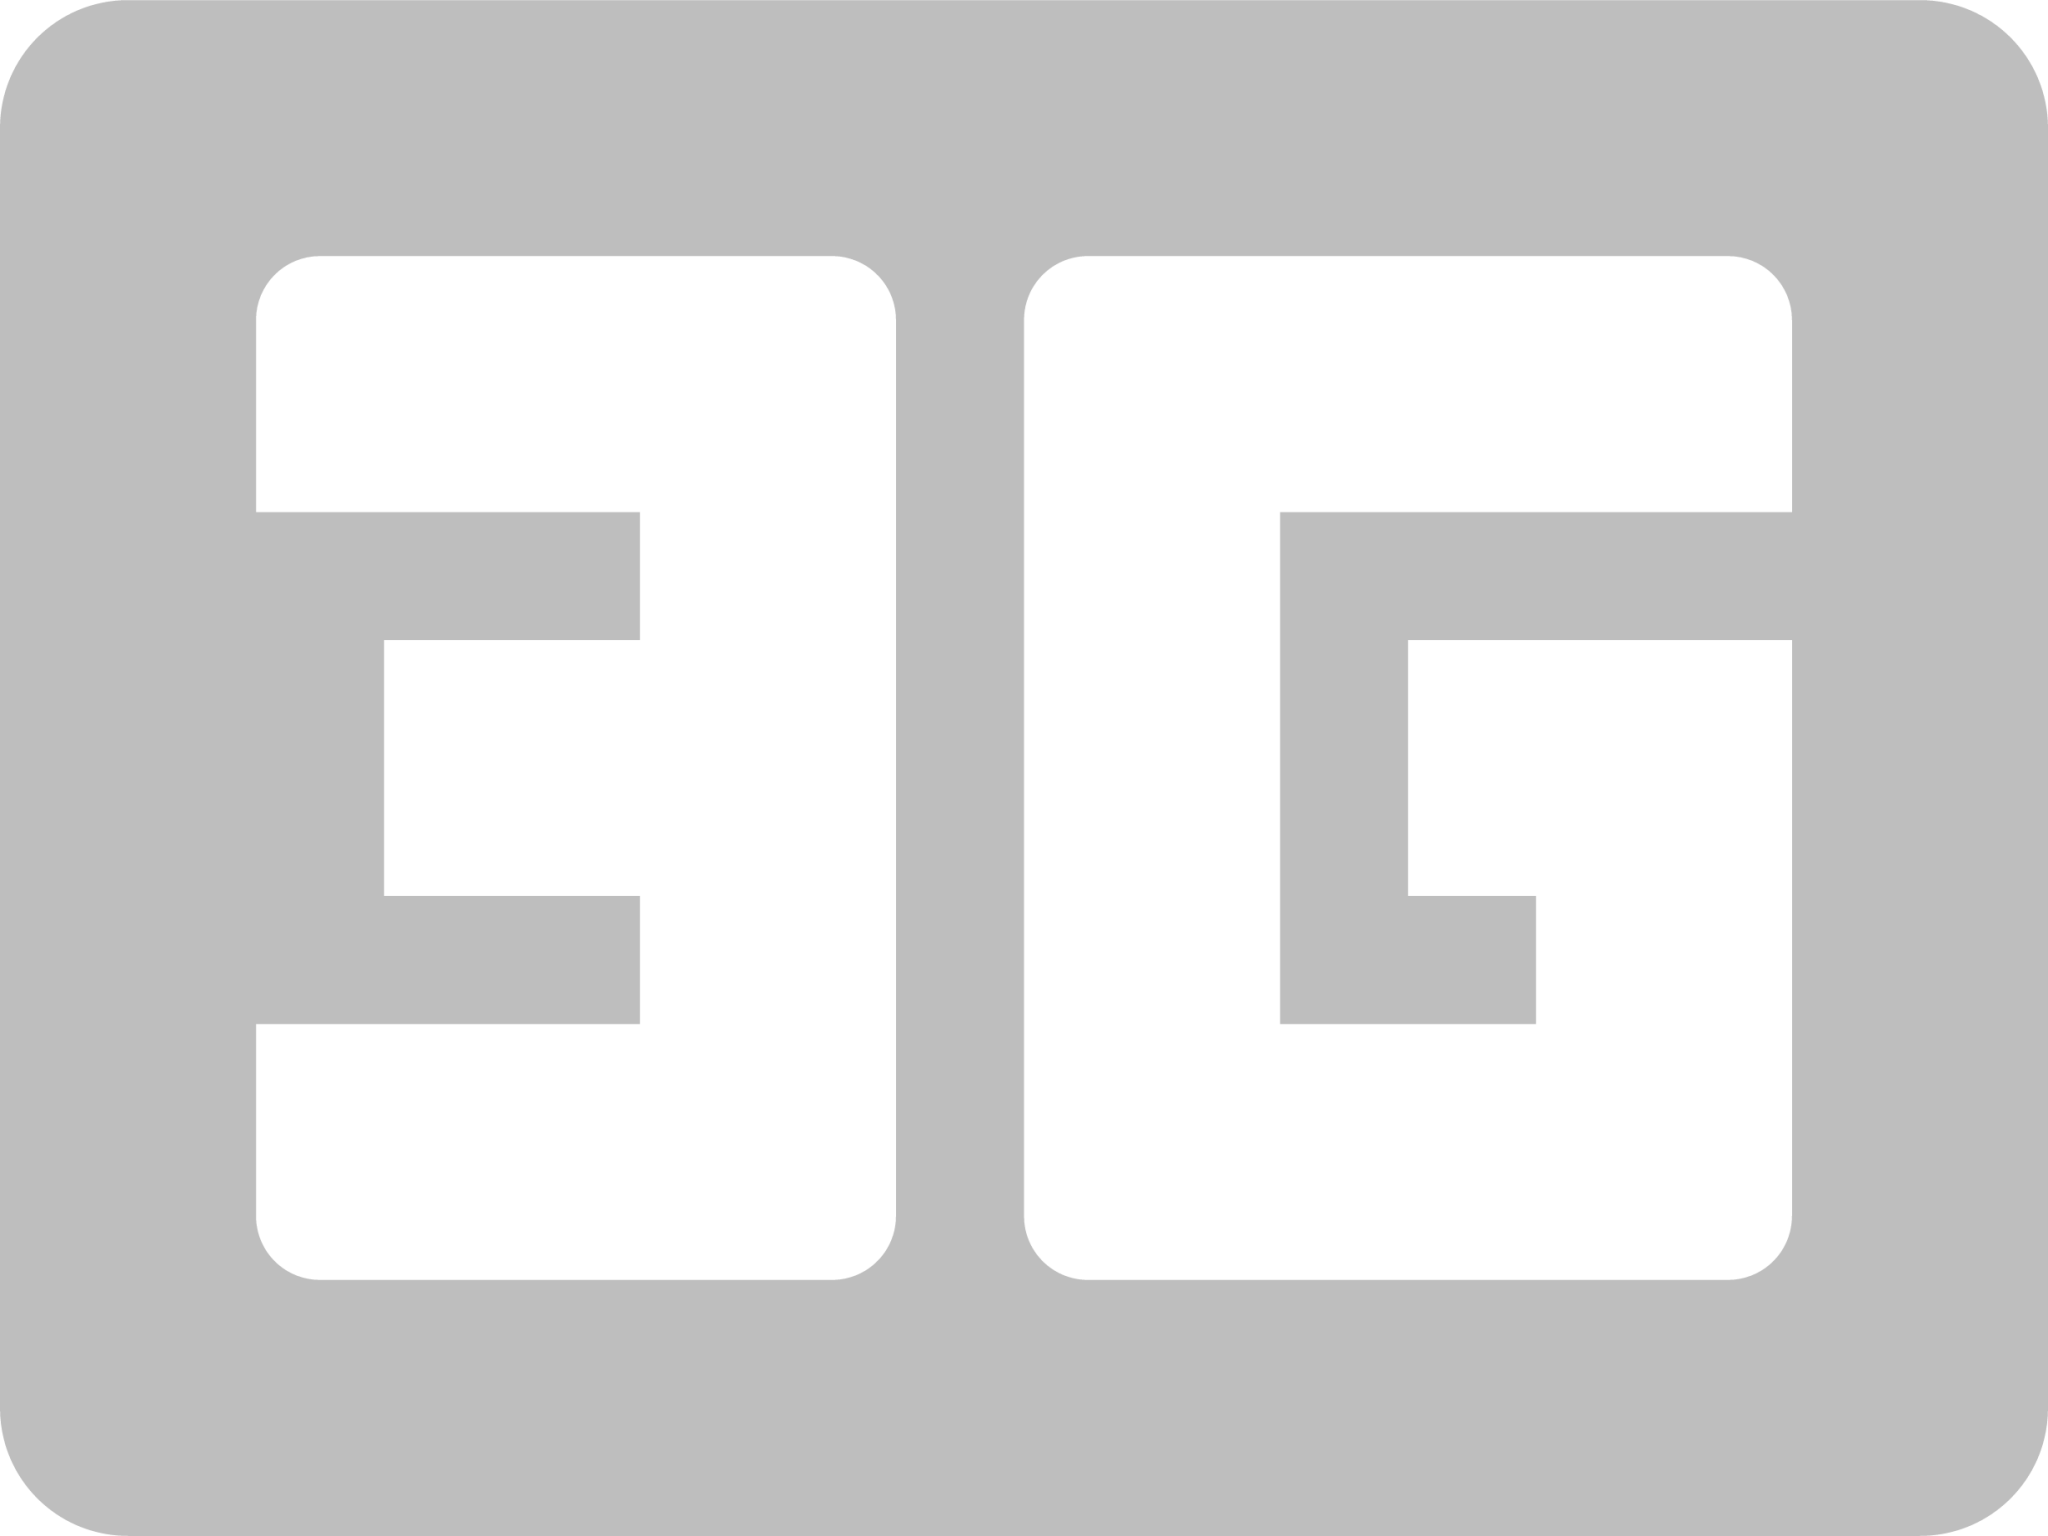 network cellular 3g symbolic icon